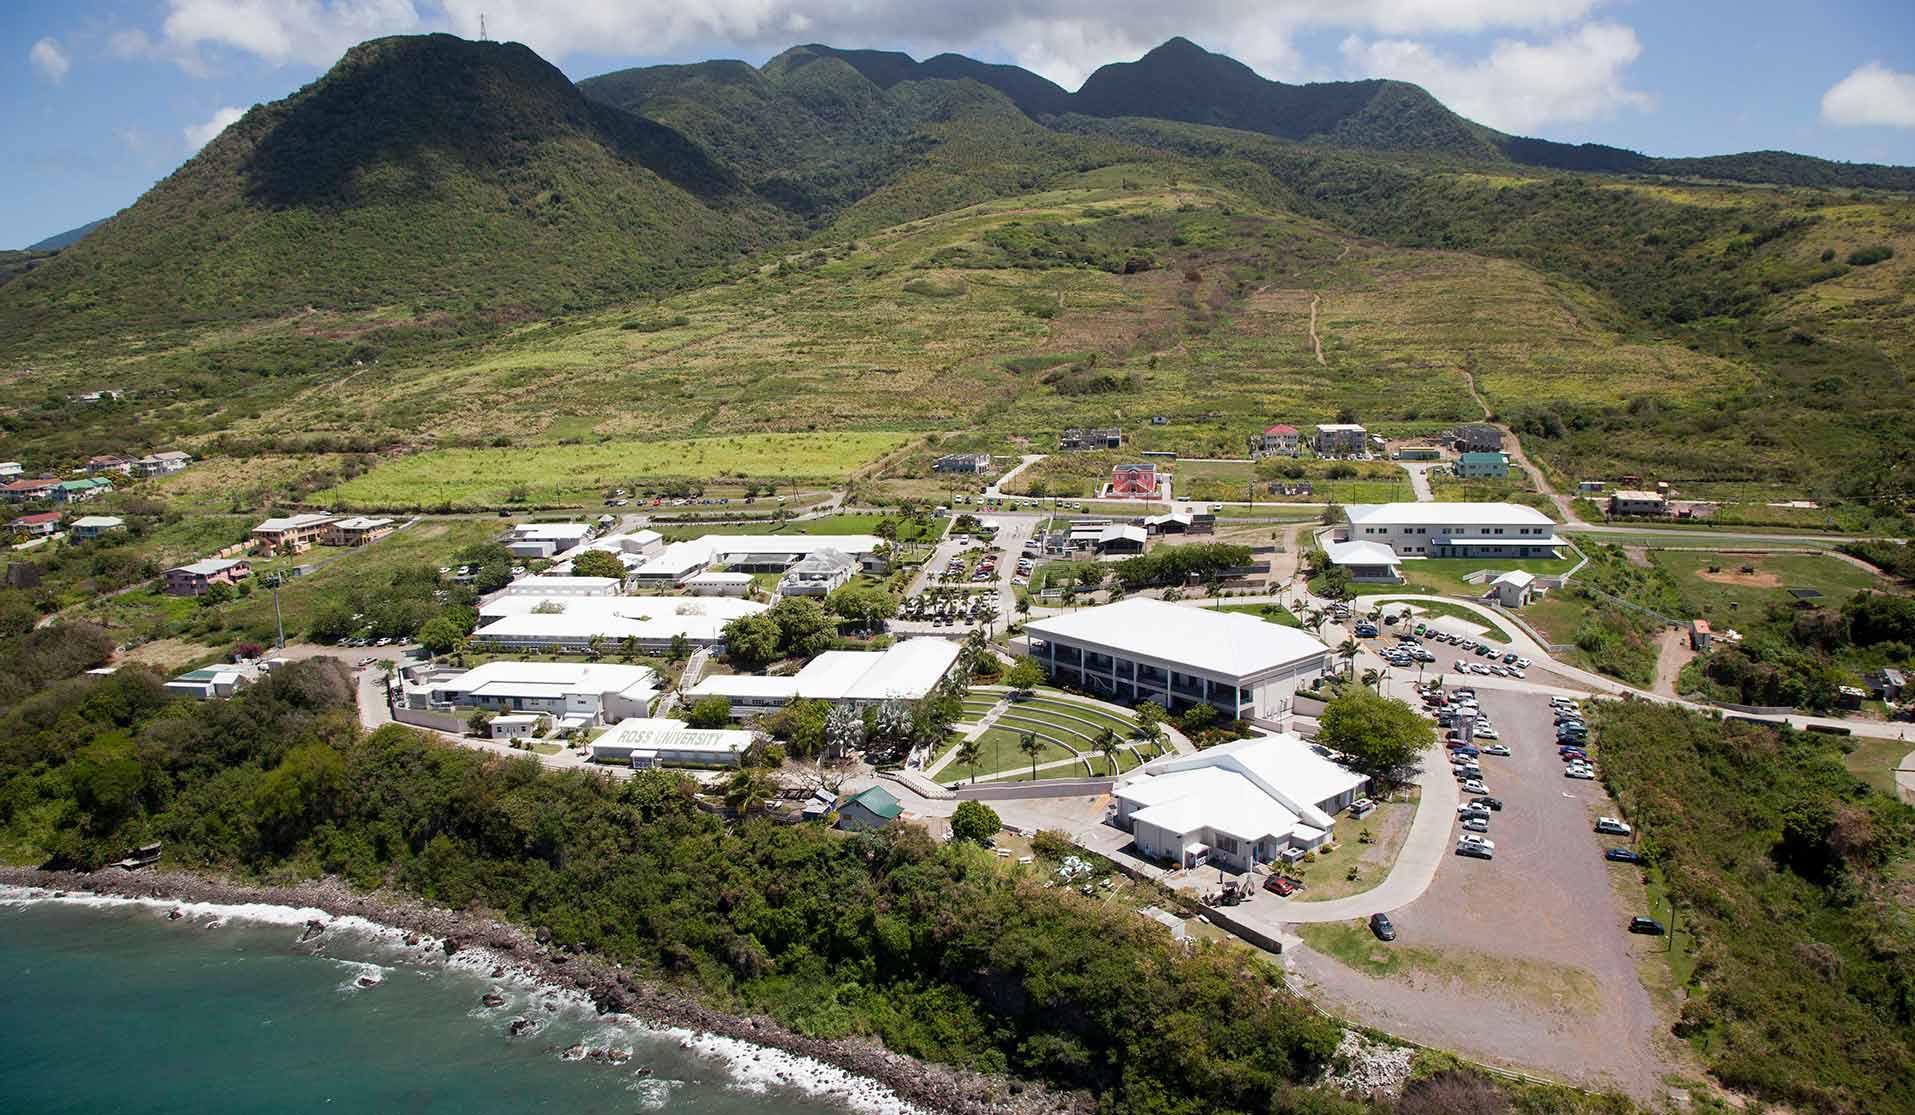 Ross University School of Veterinary Medicine campus on the island of St. Kitts